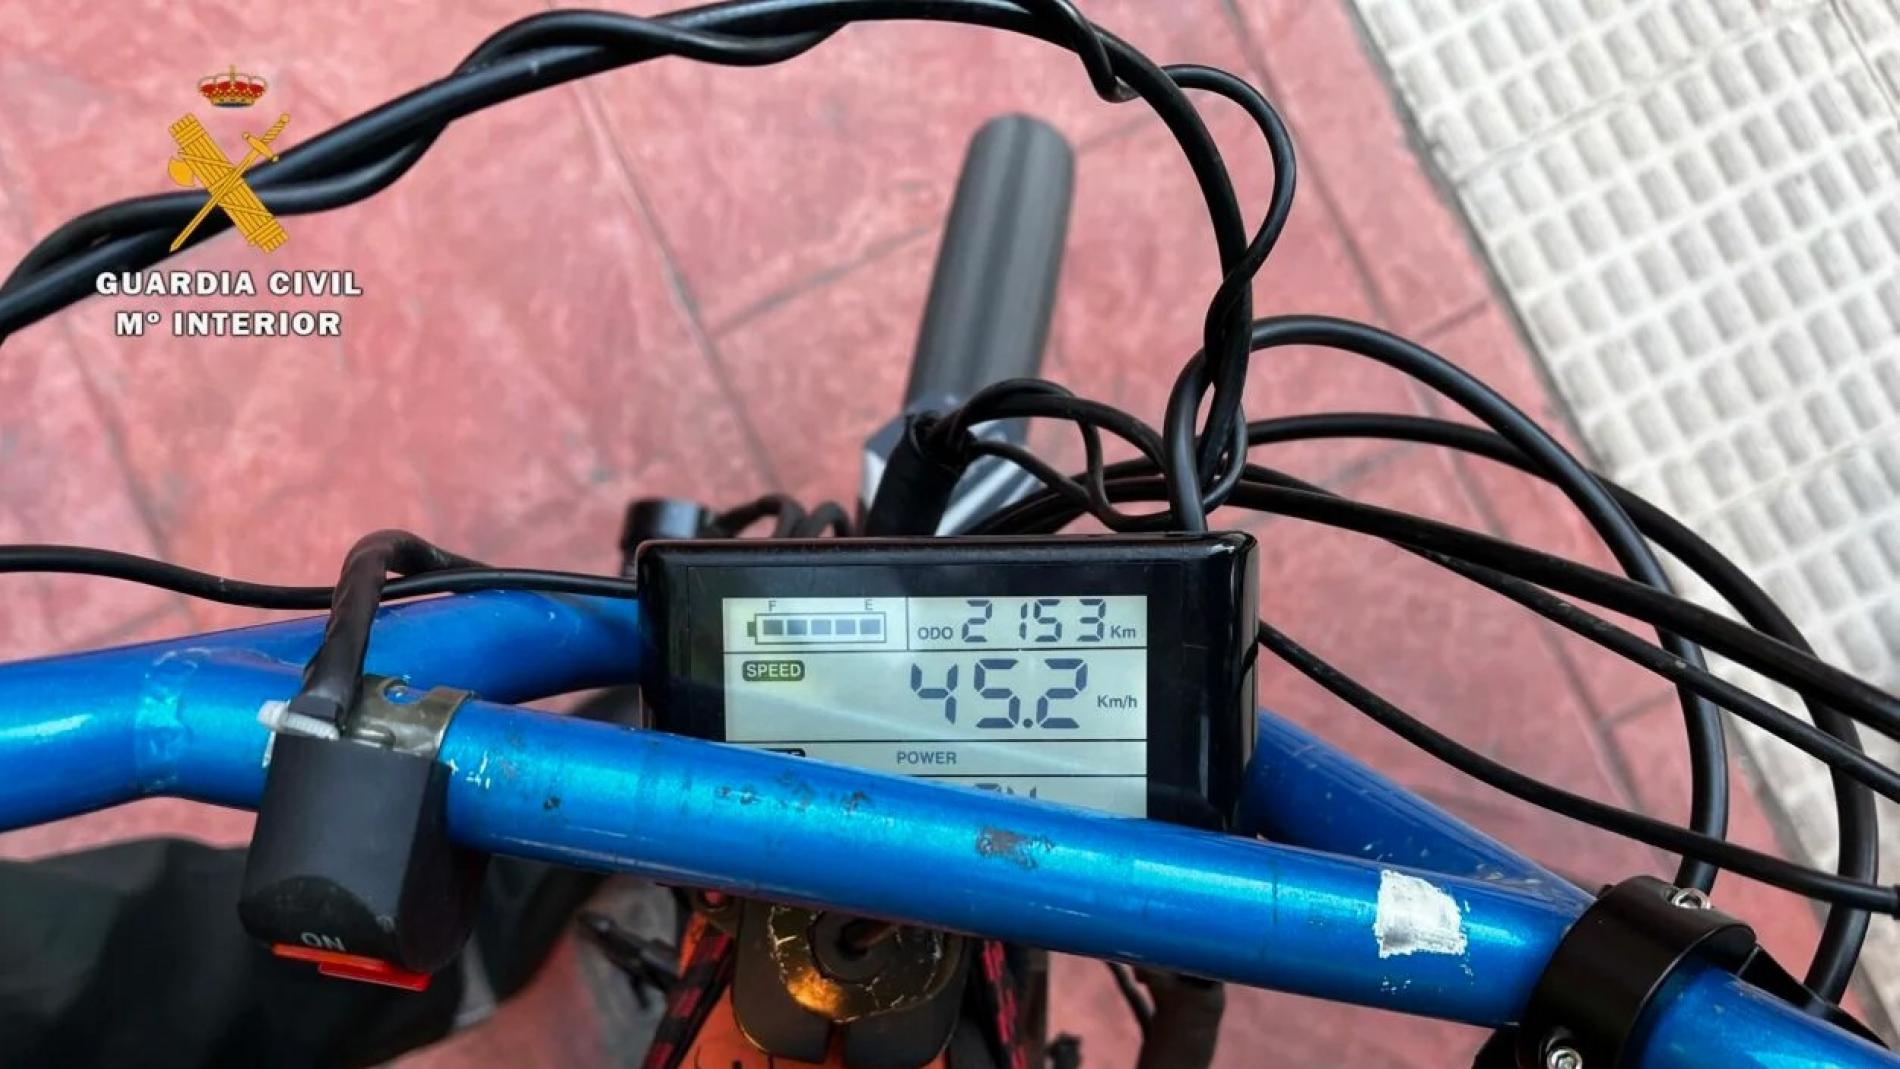 KIT 250w uso via pública - Convertir bicicleta en eléctrica